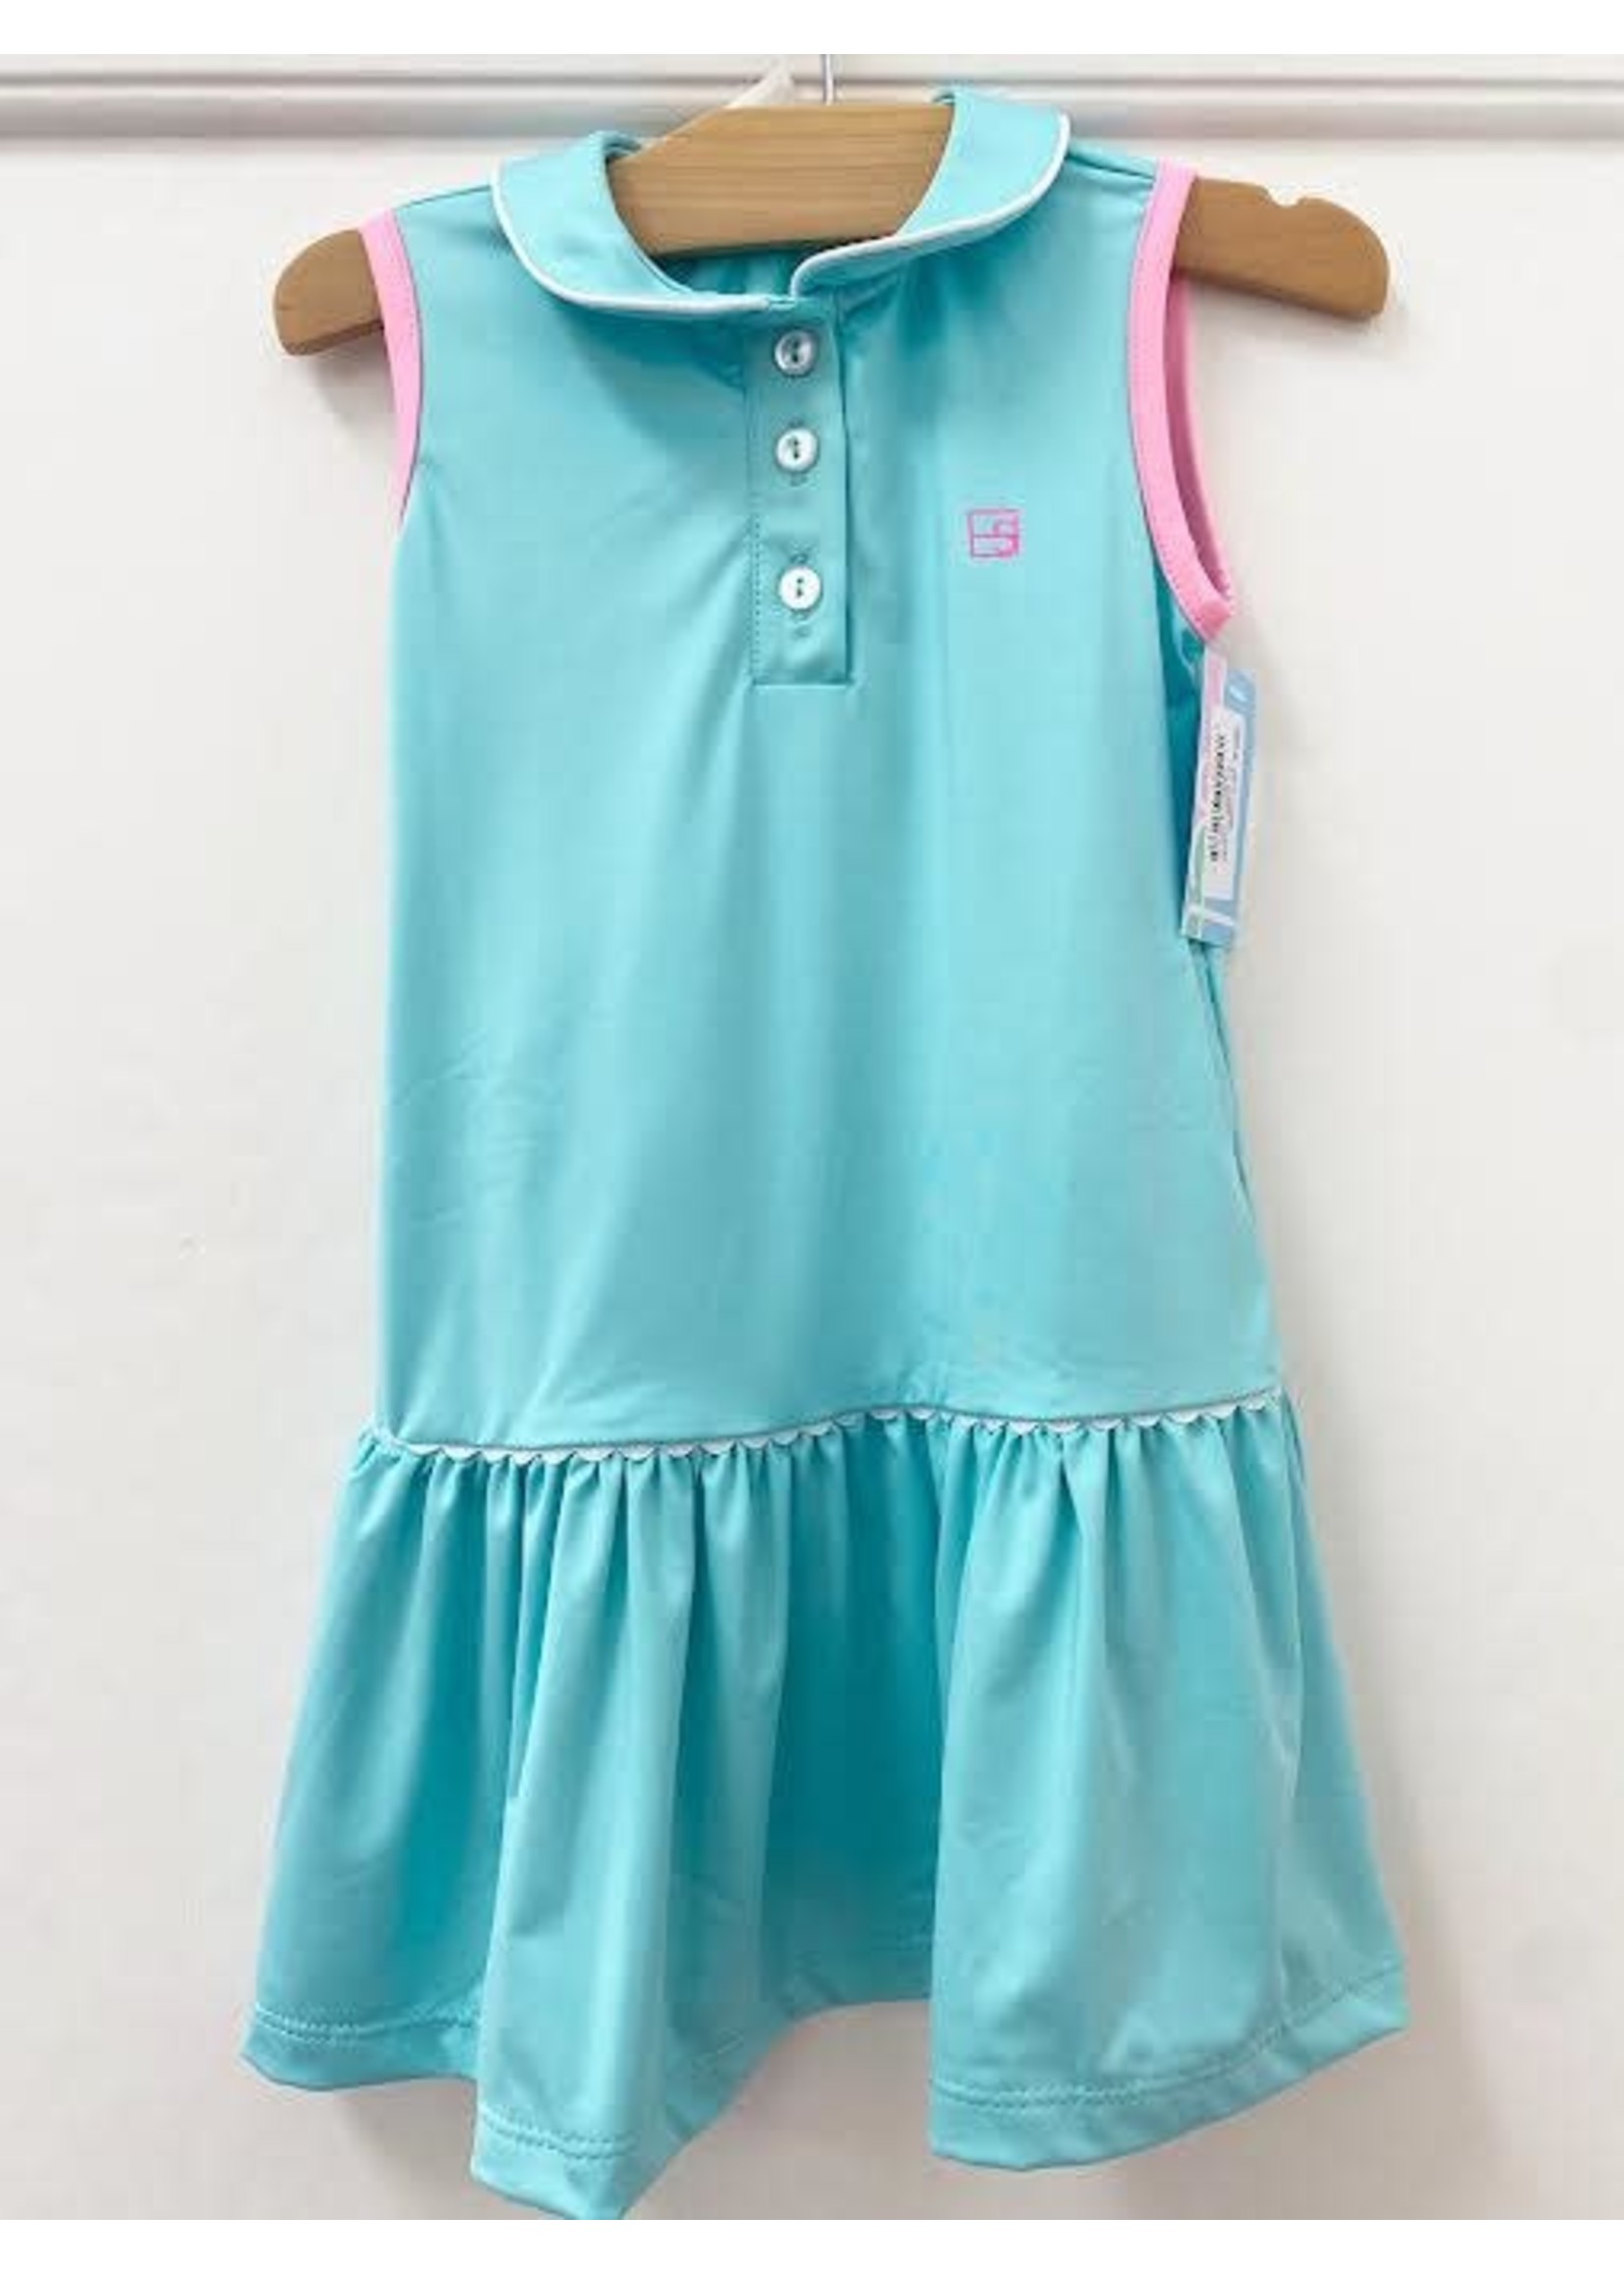 Set Darla Dress - Turquoise w/ White Ric Rack & Pink